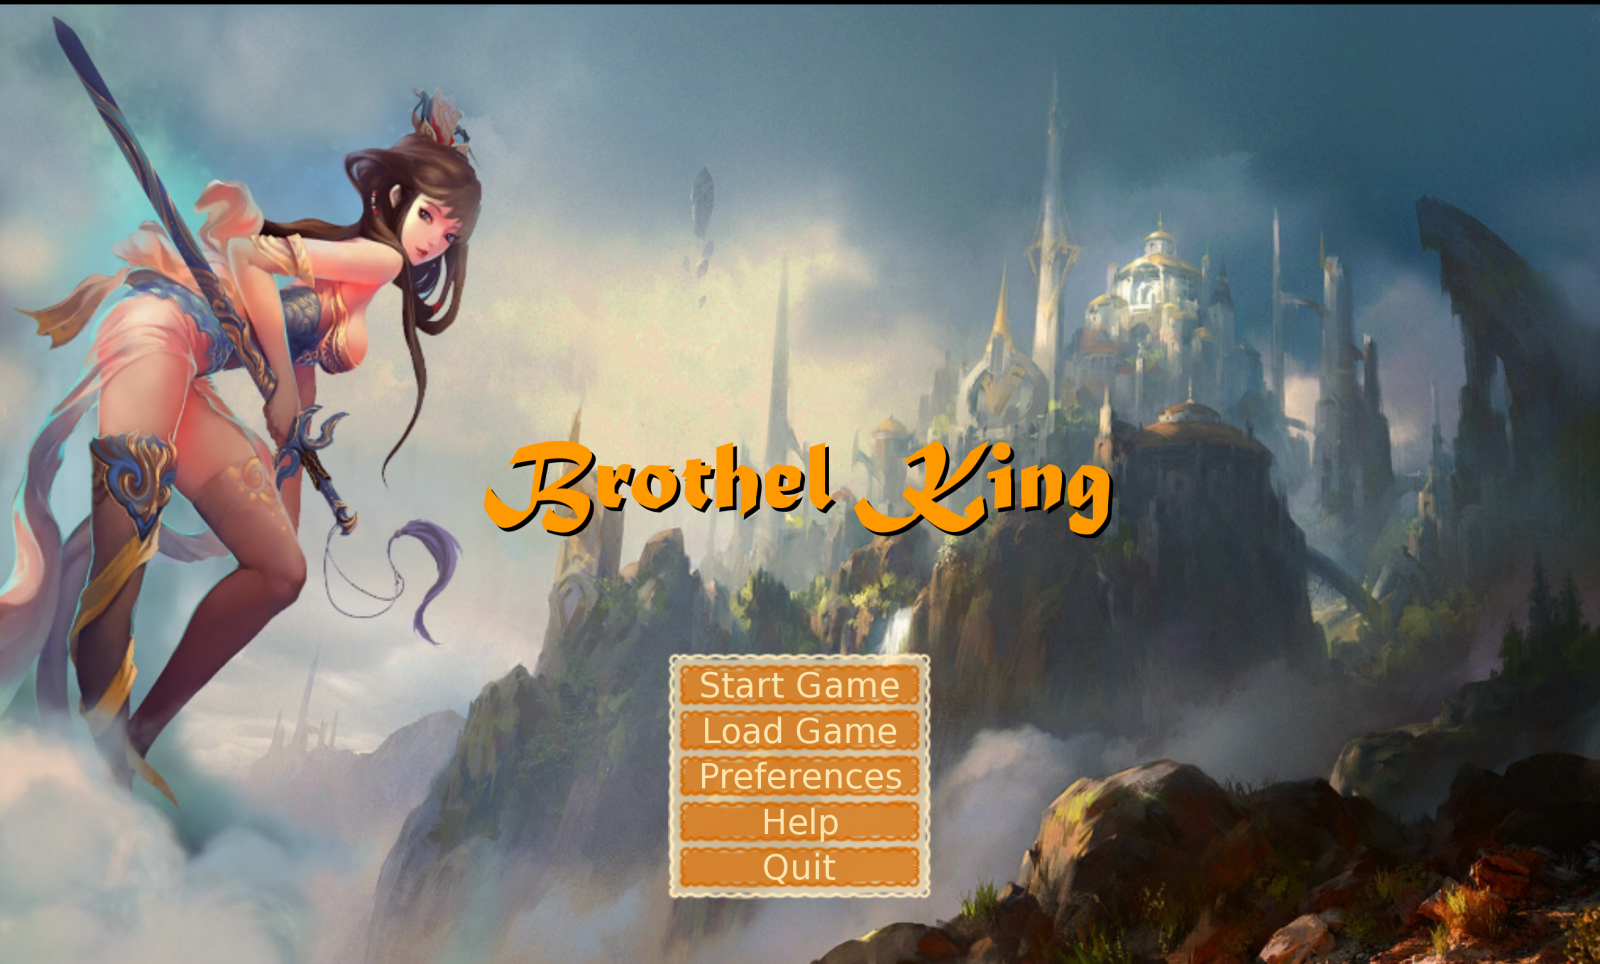 Download Kings Porn - Brothel King v0.14 - free game download, reviews, mega - xGames